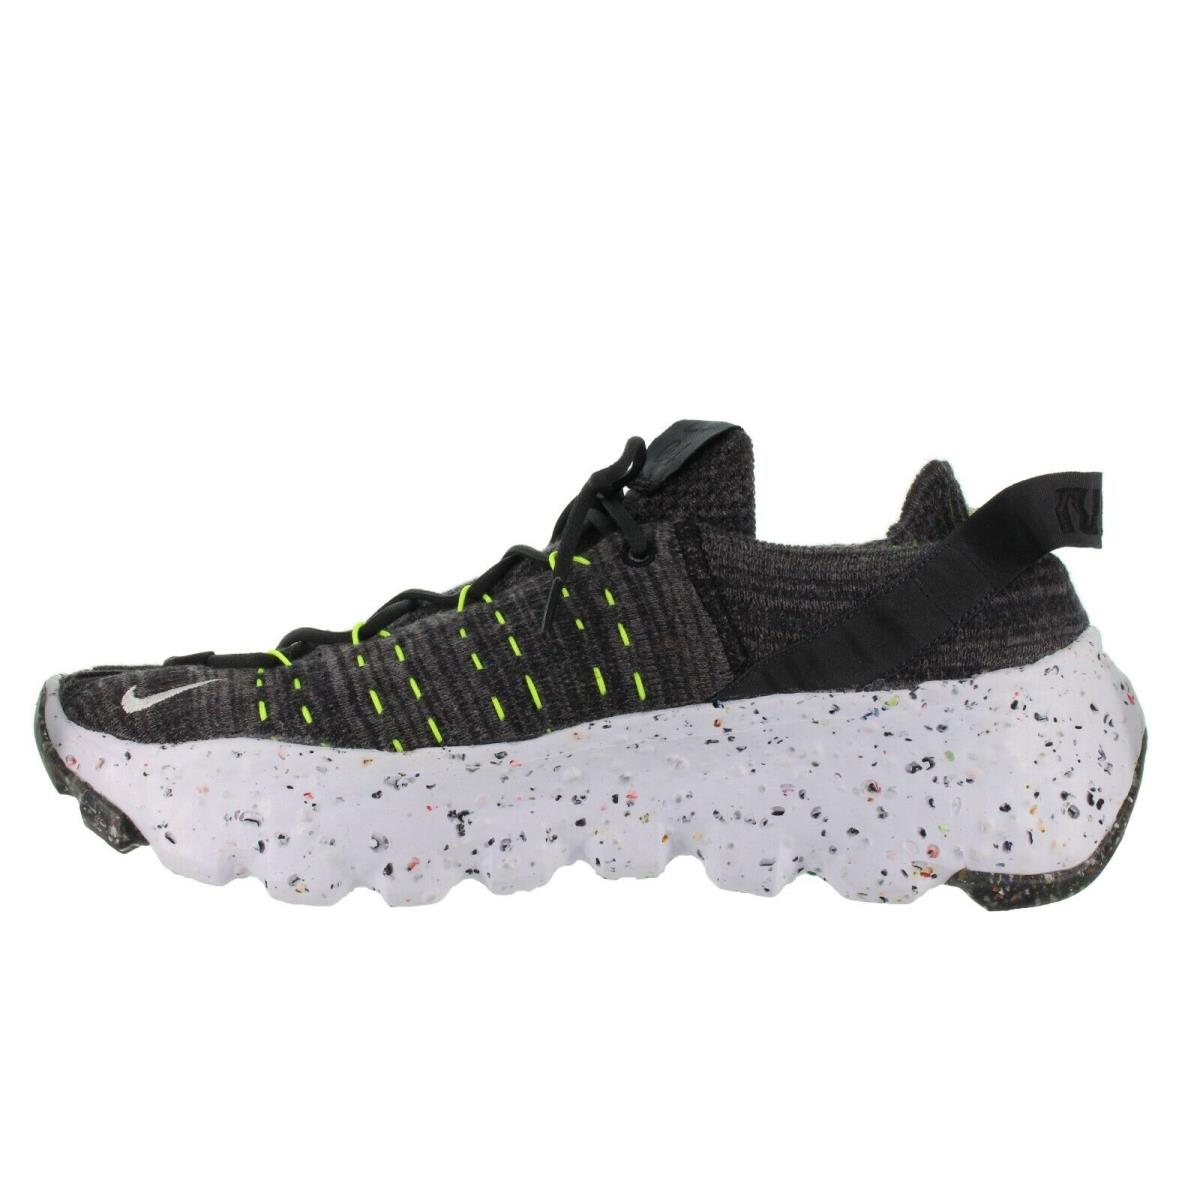 Nike Men`s Space Hippie 04 Black/grey Running Shoes Multiple Size - Black, Grey, Volt, White